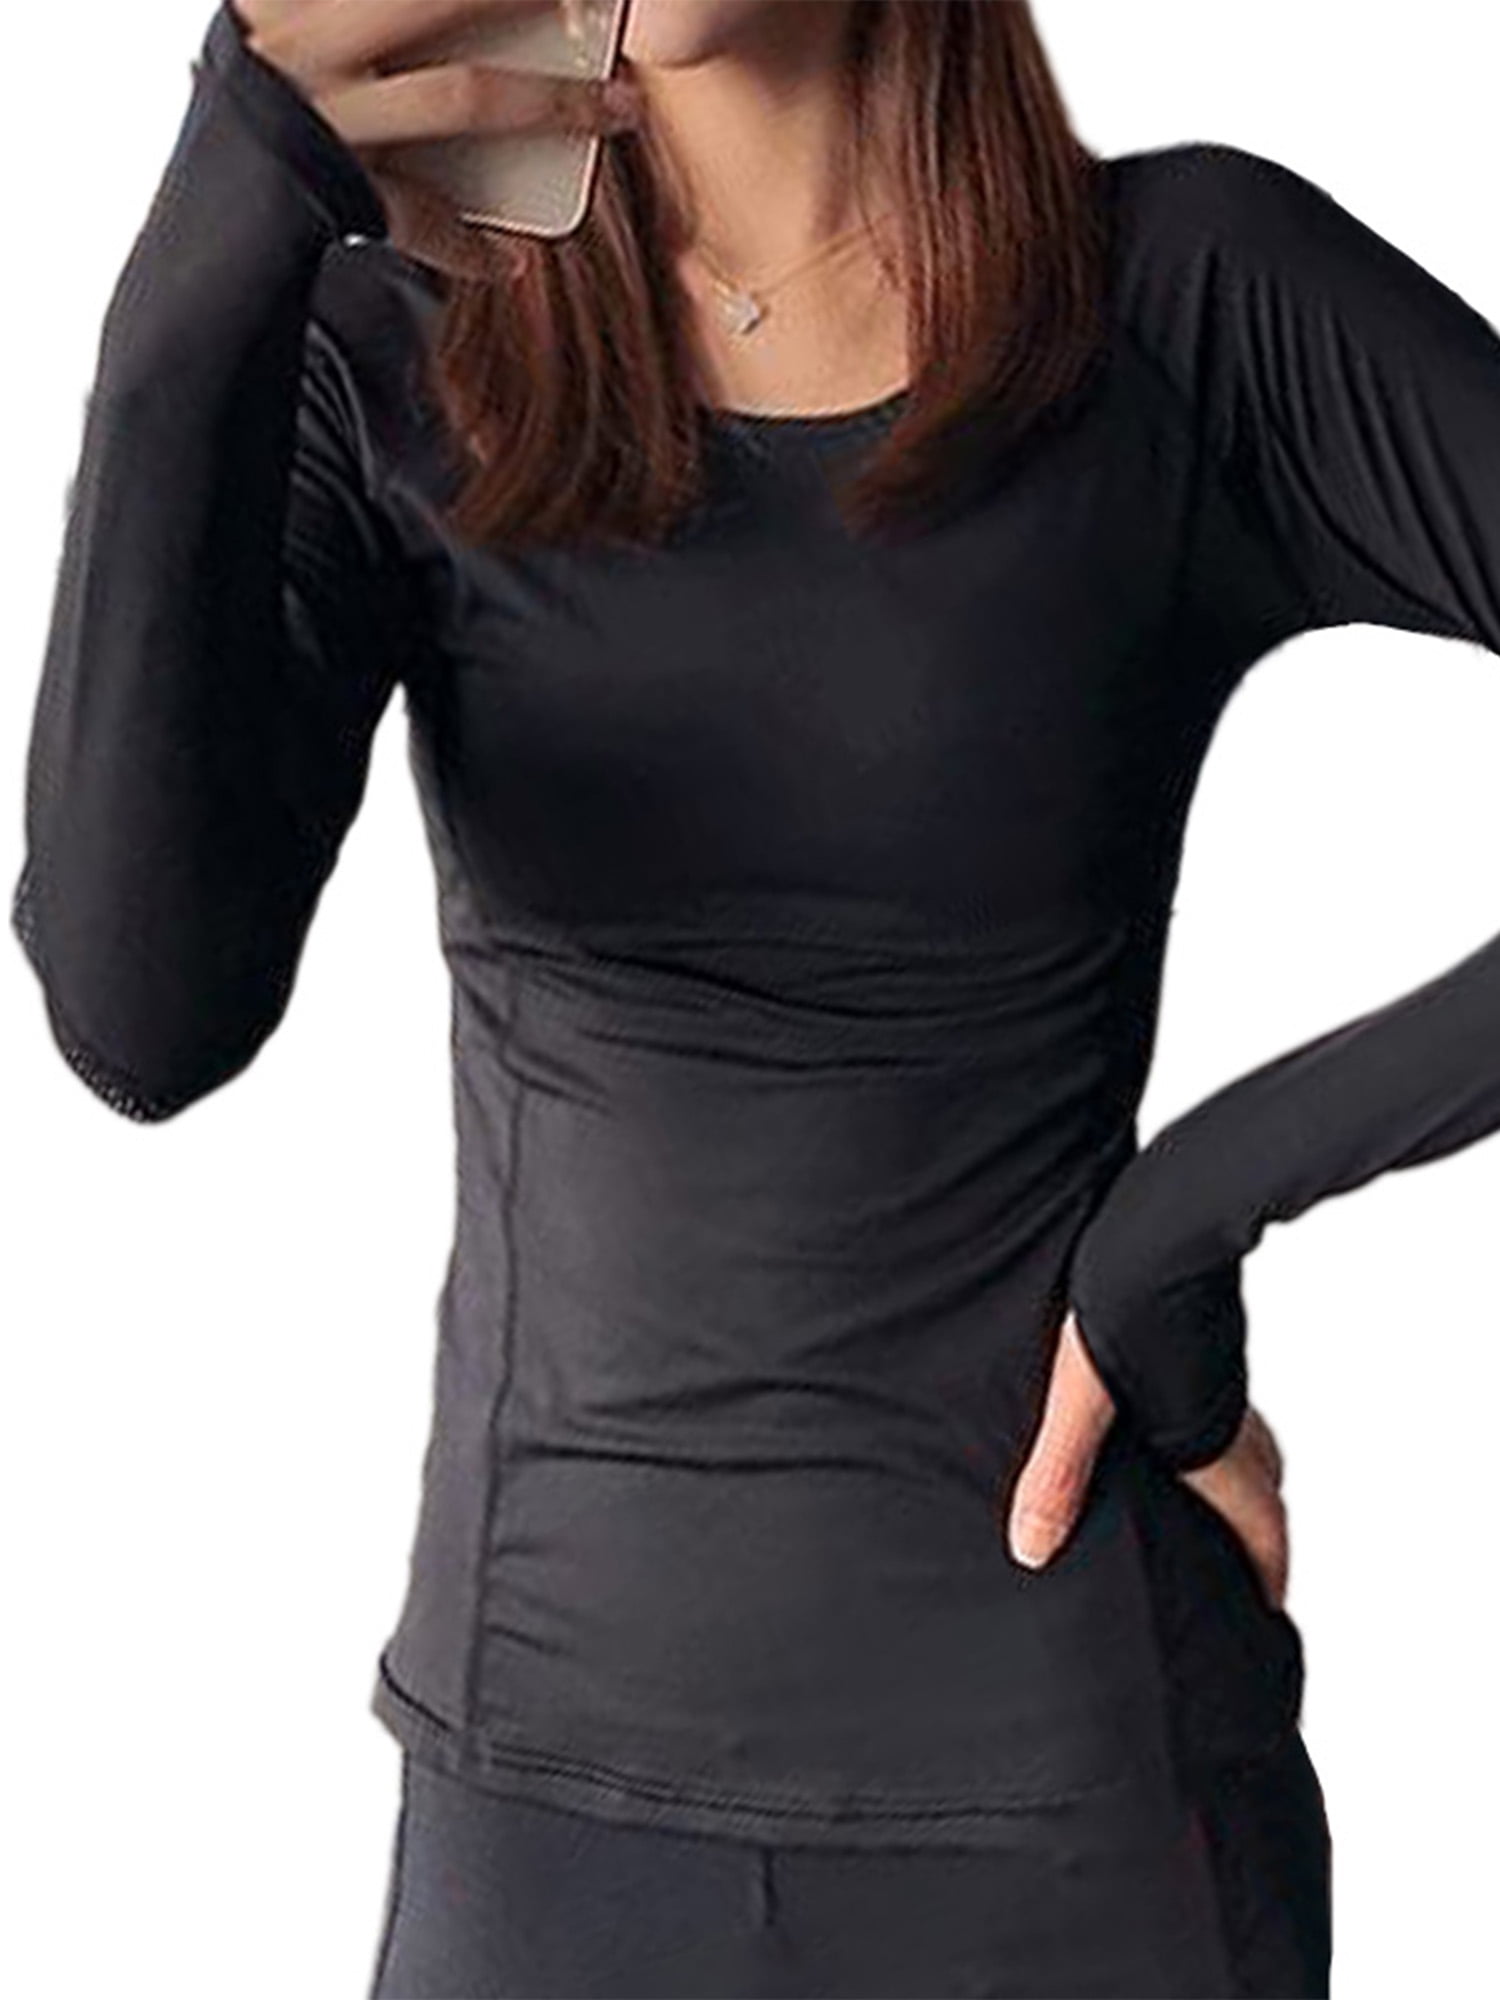 Slim Indio Tee - Black Cotton T Shirt, Womens Workout Shirts